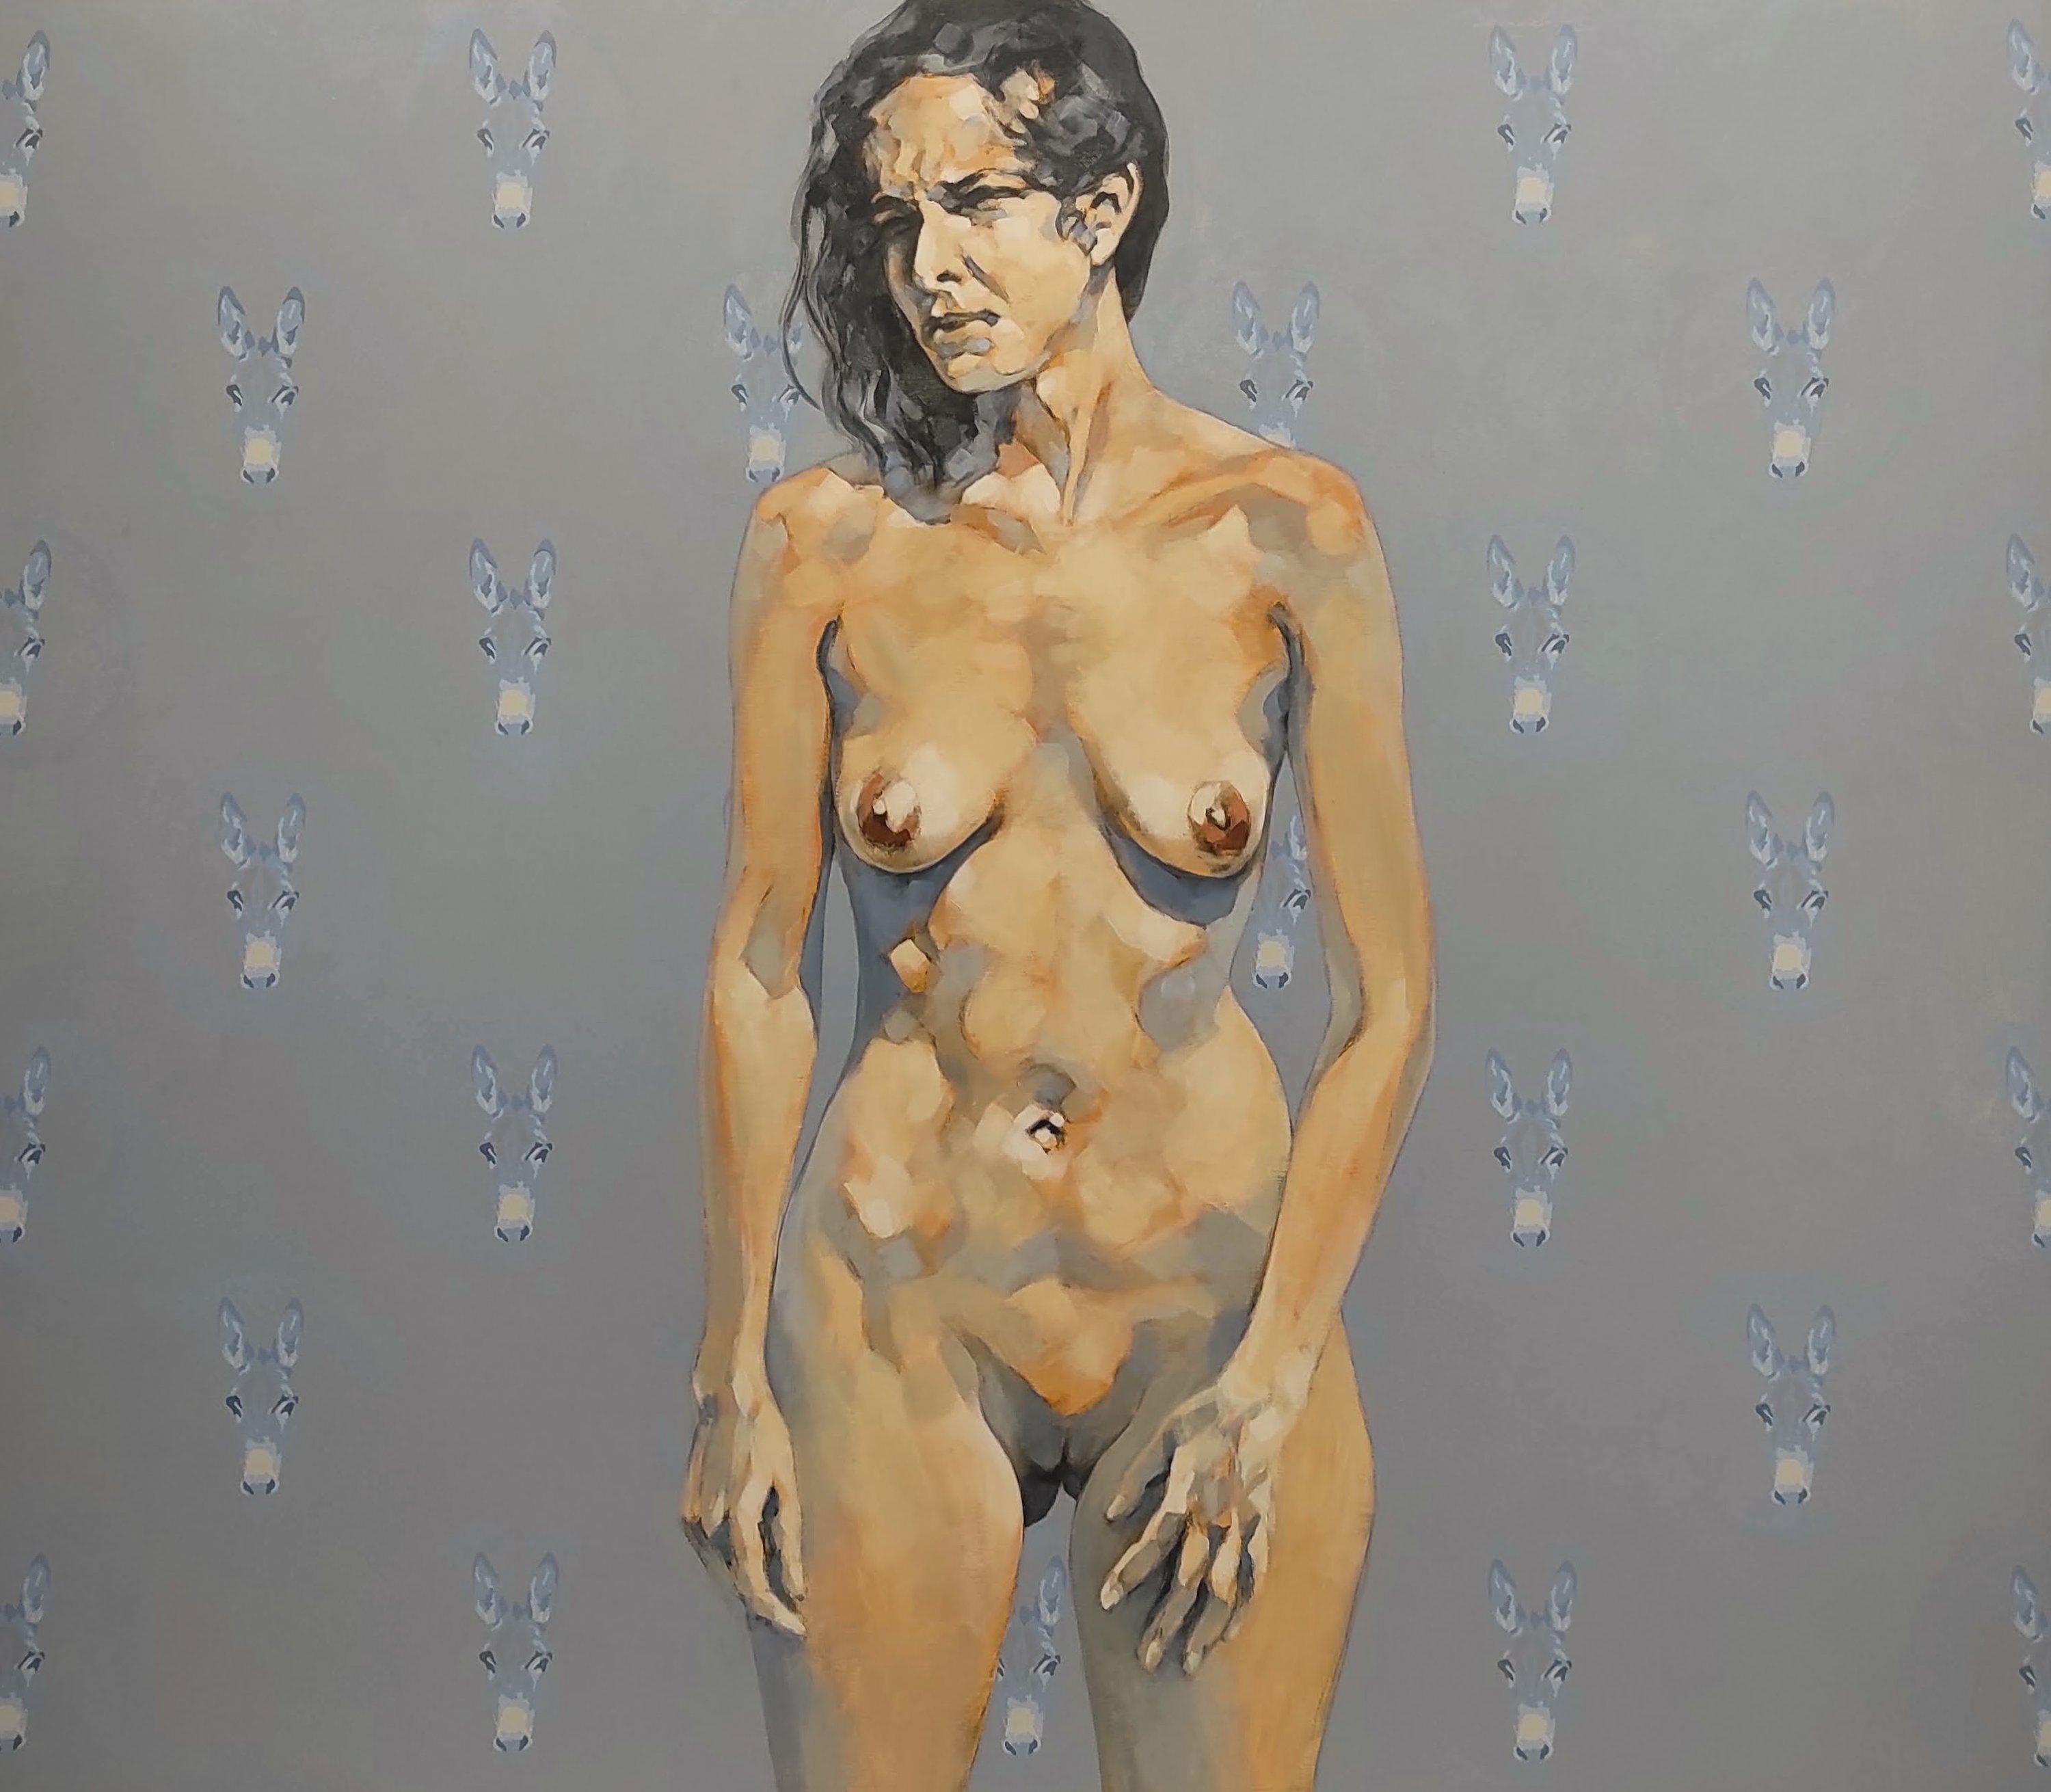 Pep Anton Xaus Nude Painting – Amerikanisches Volk III - 21. Jahrhundert, Figuratives, Akt, weiblicher Körper, Feminismus, Acryl